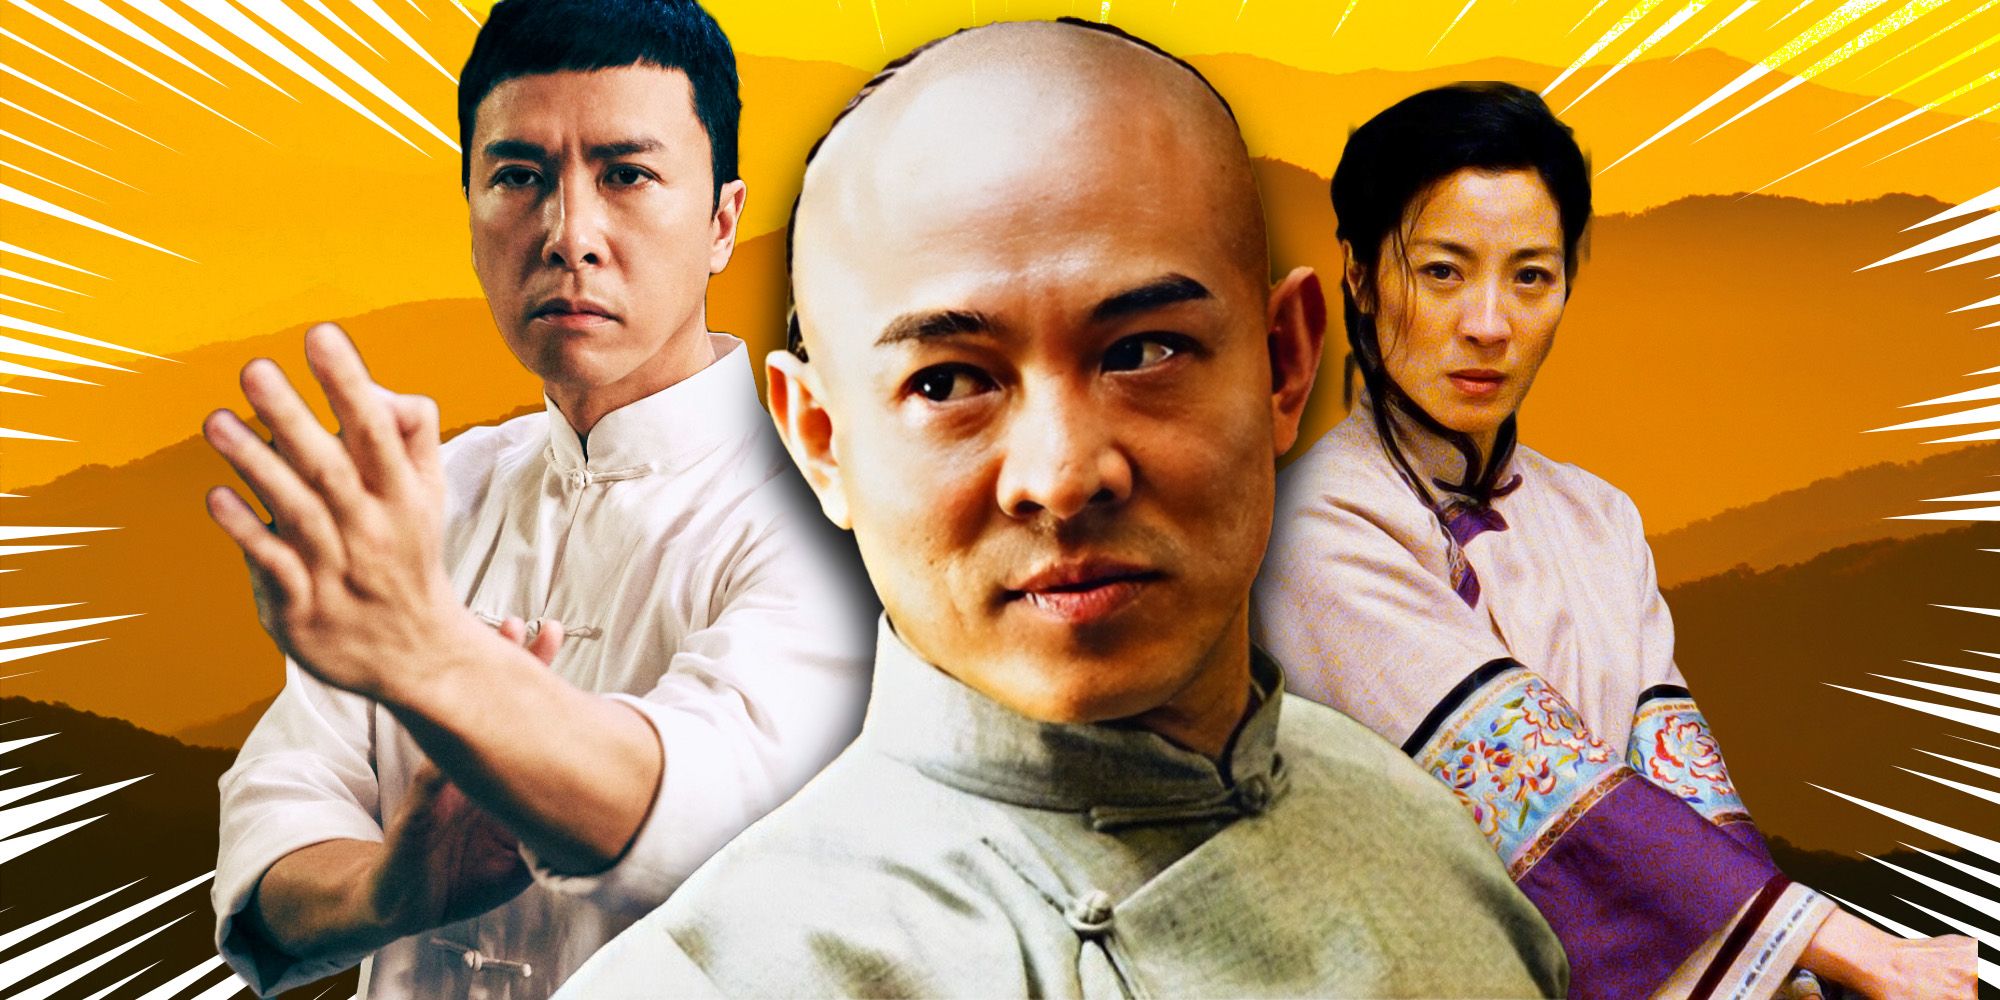 Donnie Yen in Ip Man 3, Michelle Yeoh in Crouching Tiger, Hidden Dragon, and Jet Li in Fearless